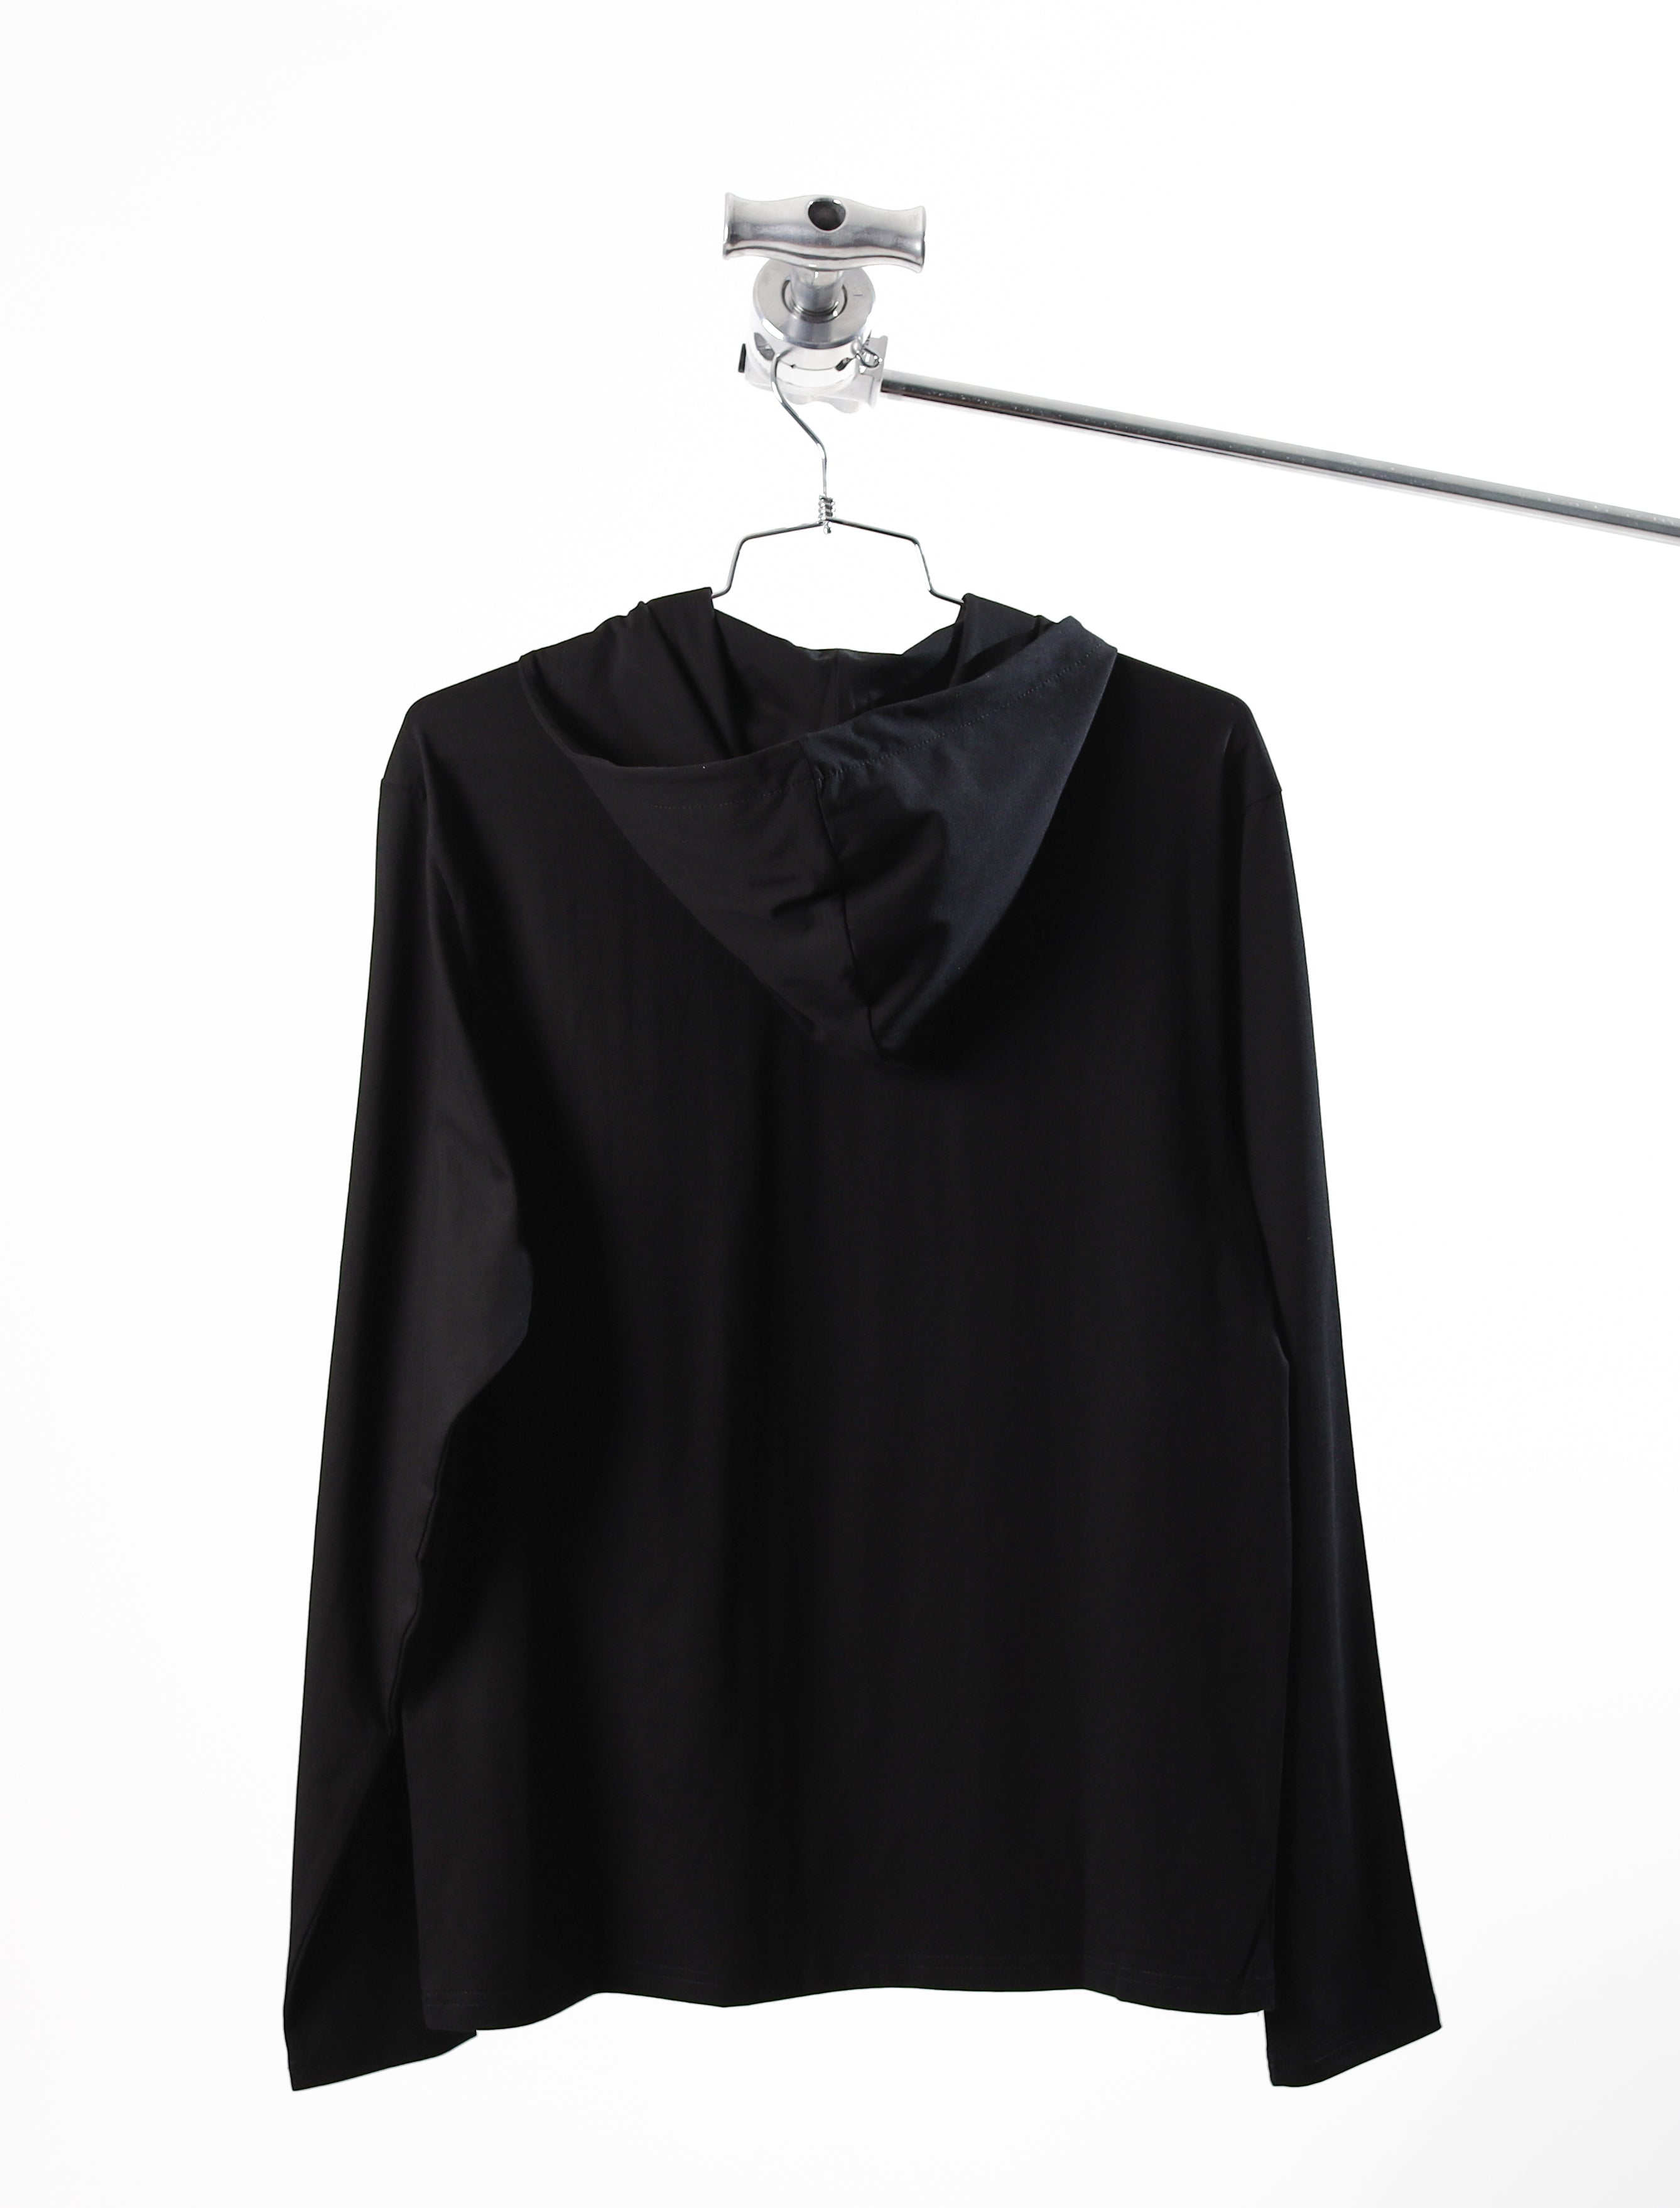 BambooFlex Unisex Hooded Long Sleeve Shirt